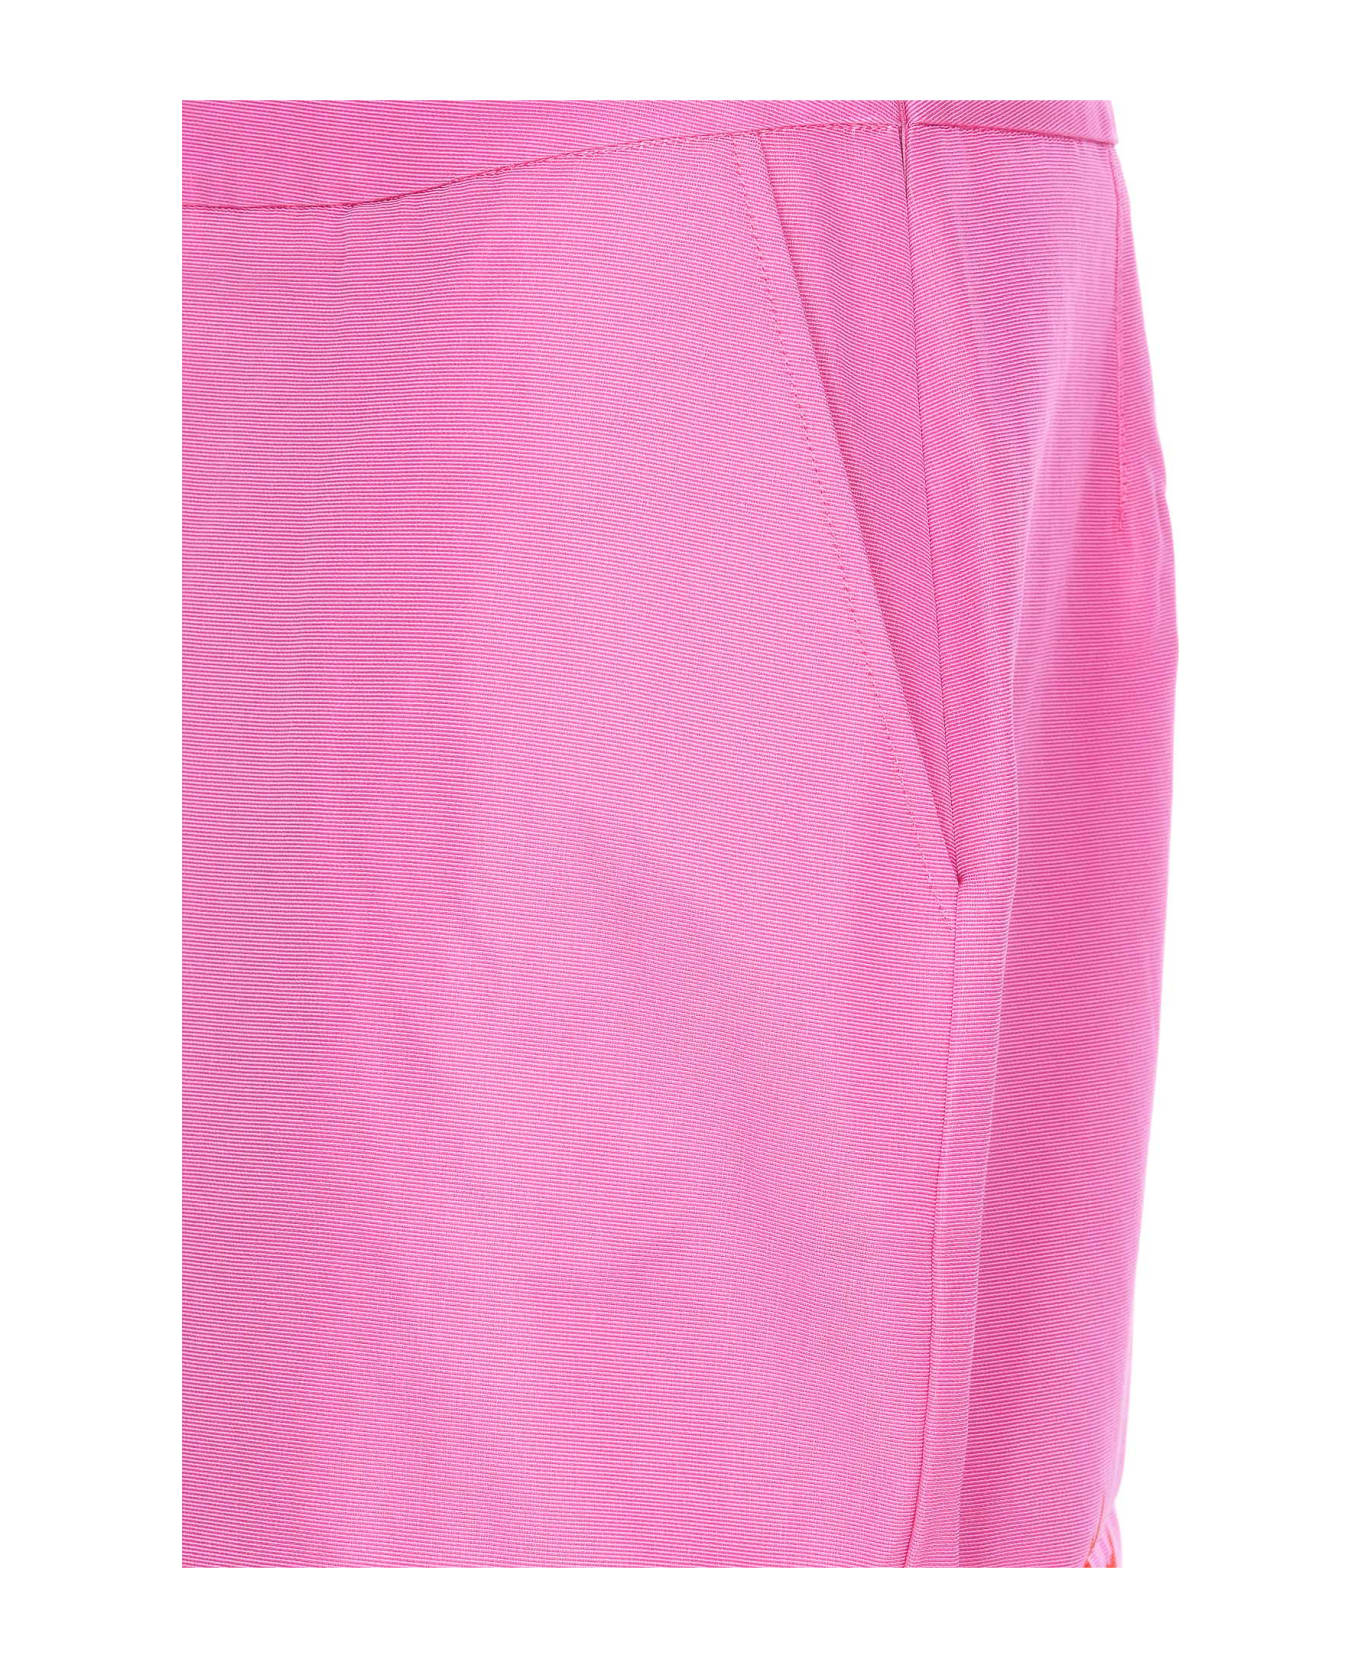 Essentiel Antwerp Pink And Red Floral Print Midi Skirt - Pink スカート